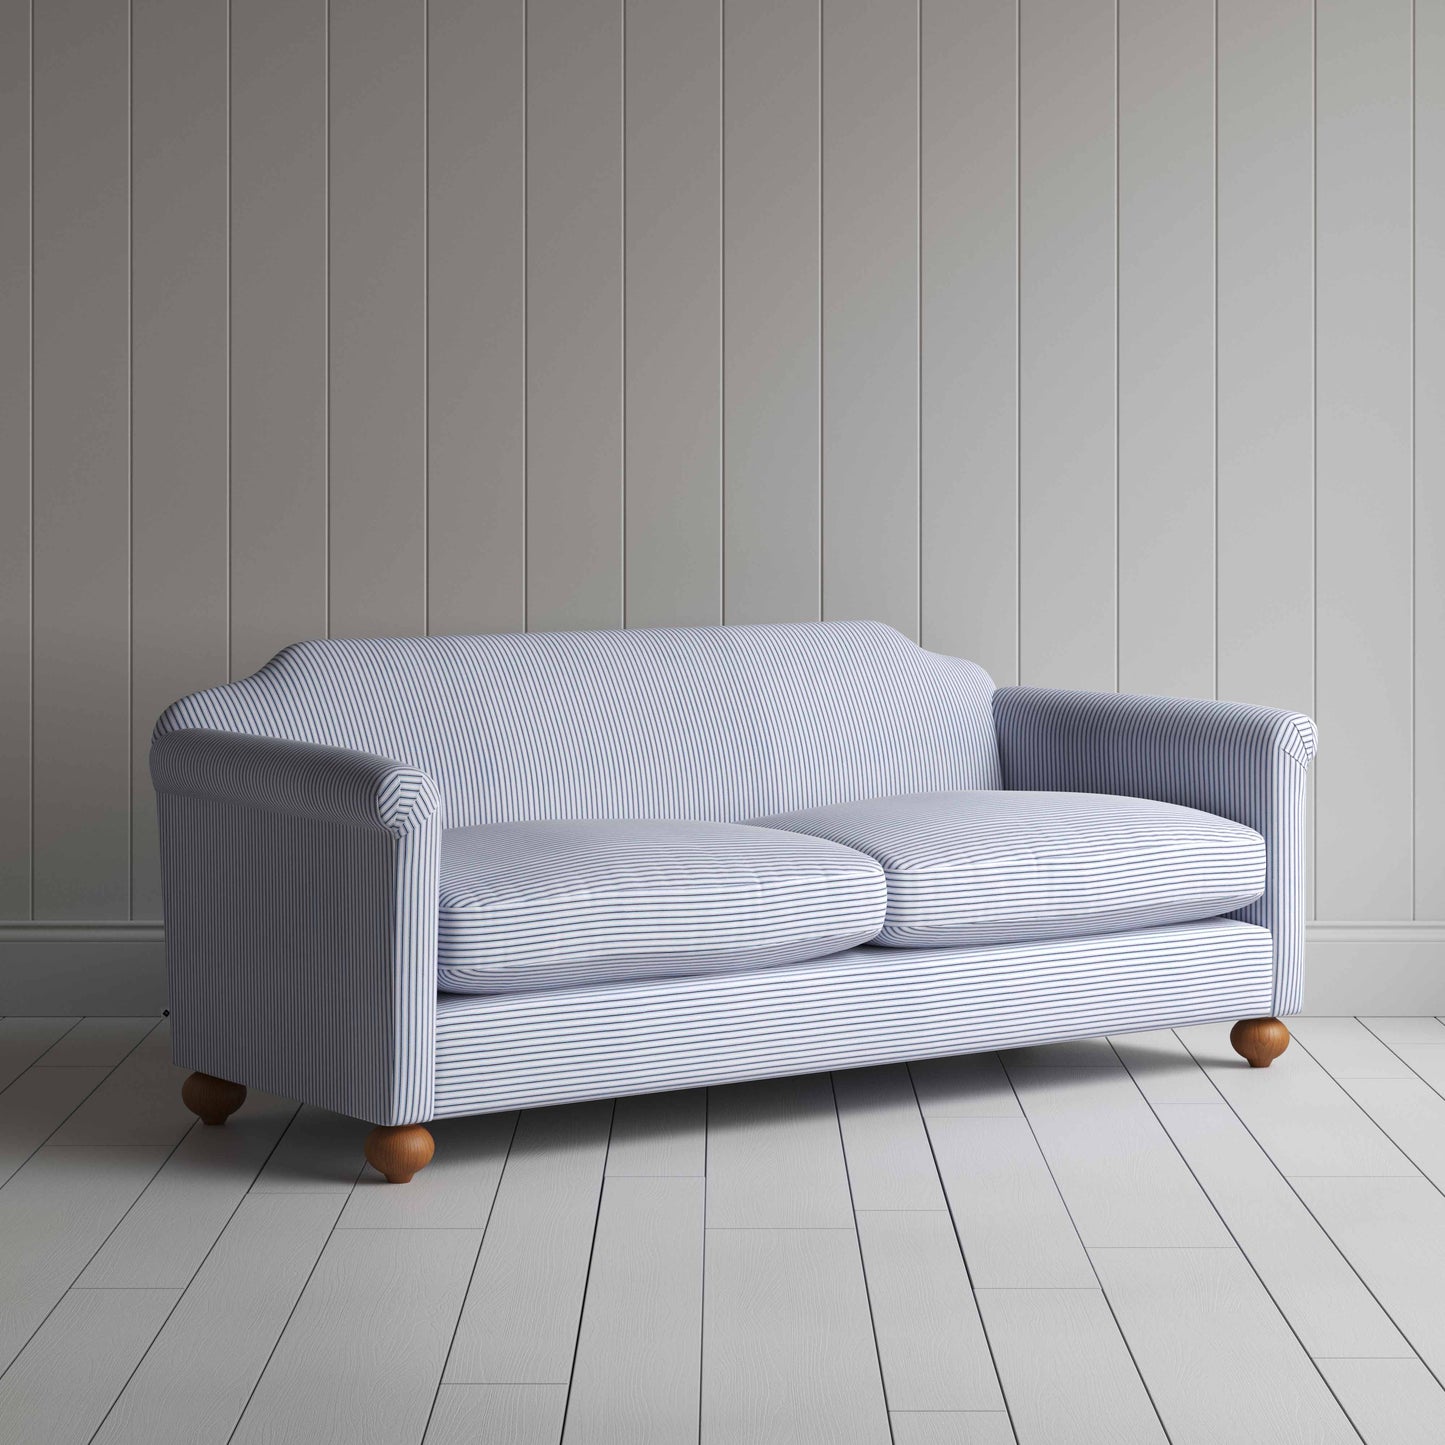 Dolittle 4 Seater Sofa in Ticking Cotton, Aqua Brown